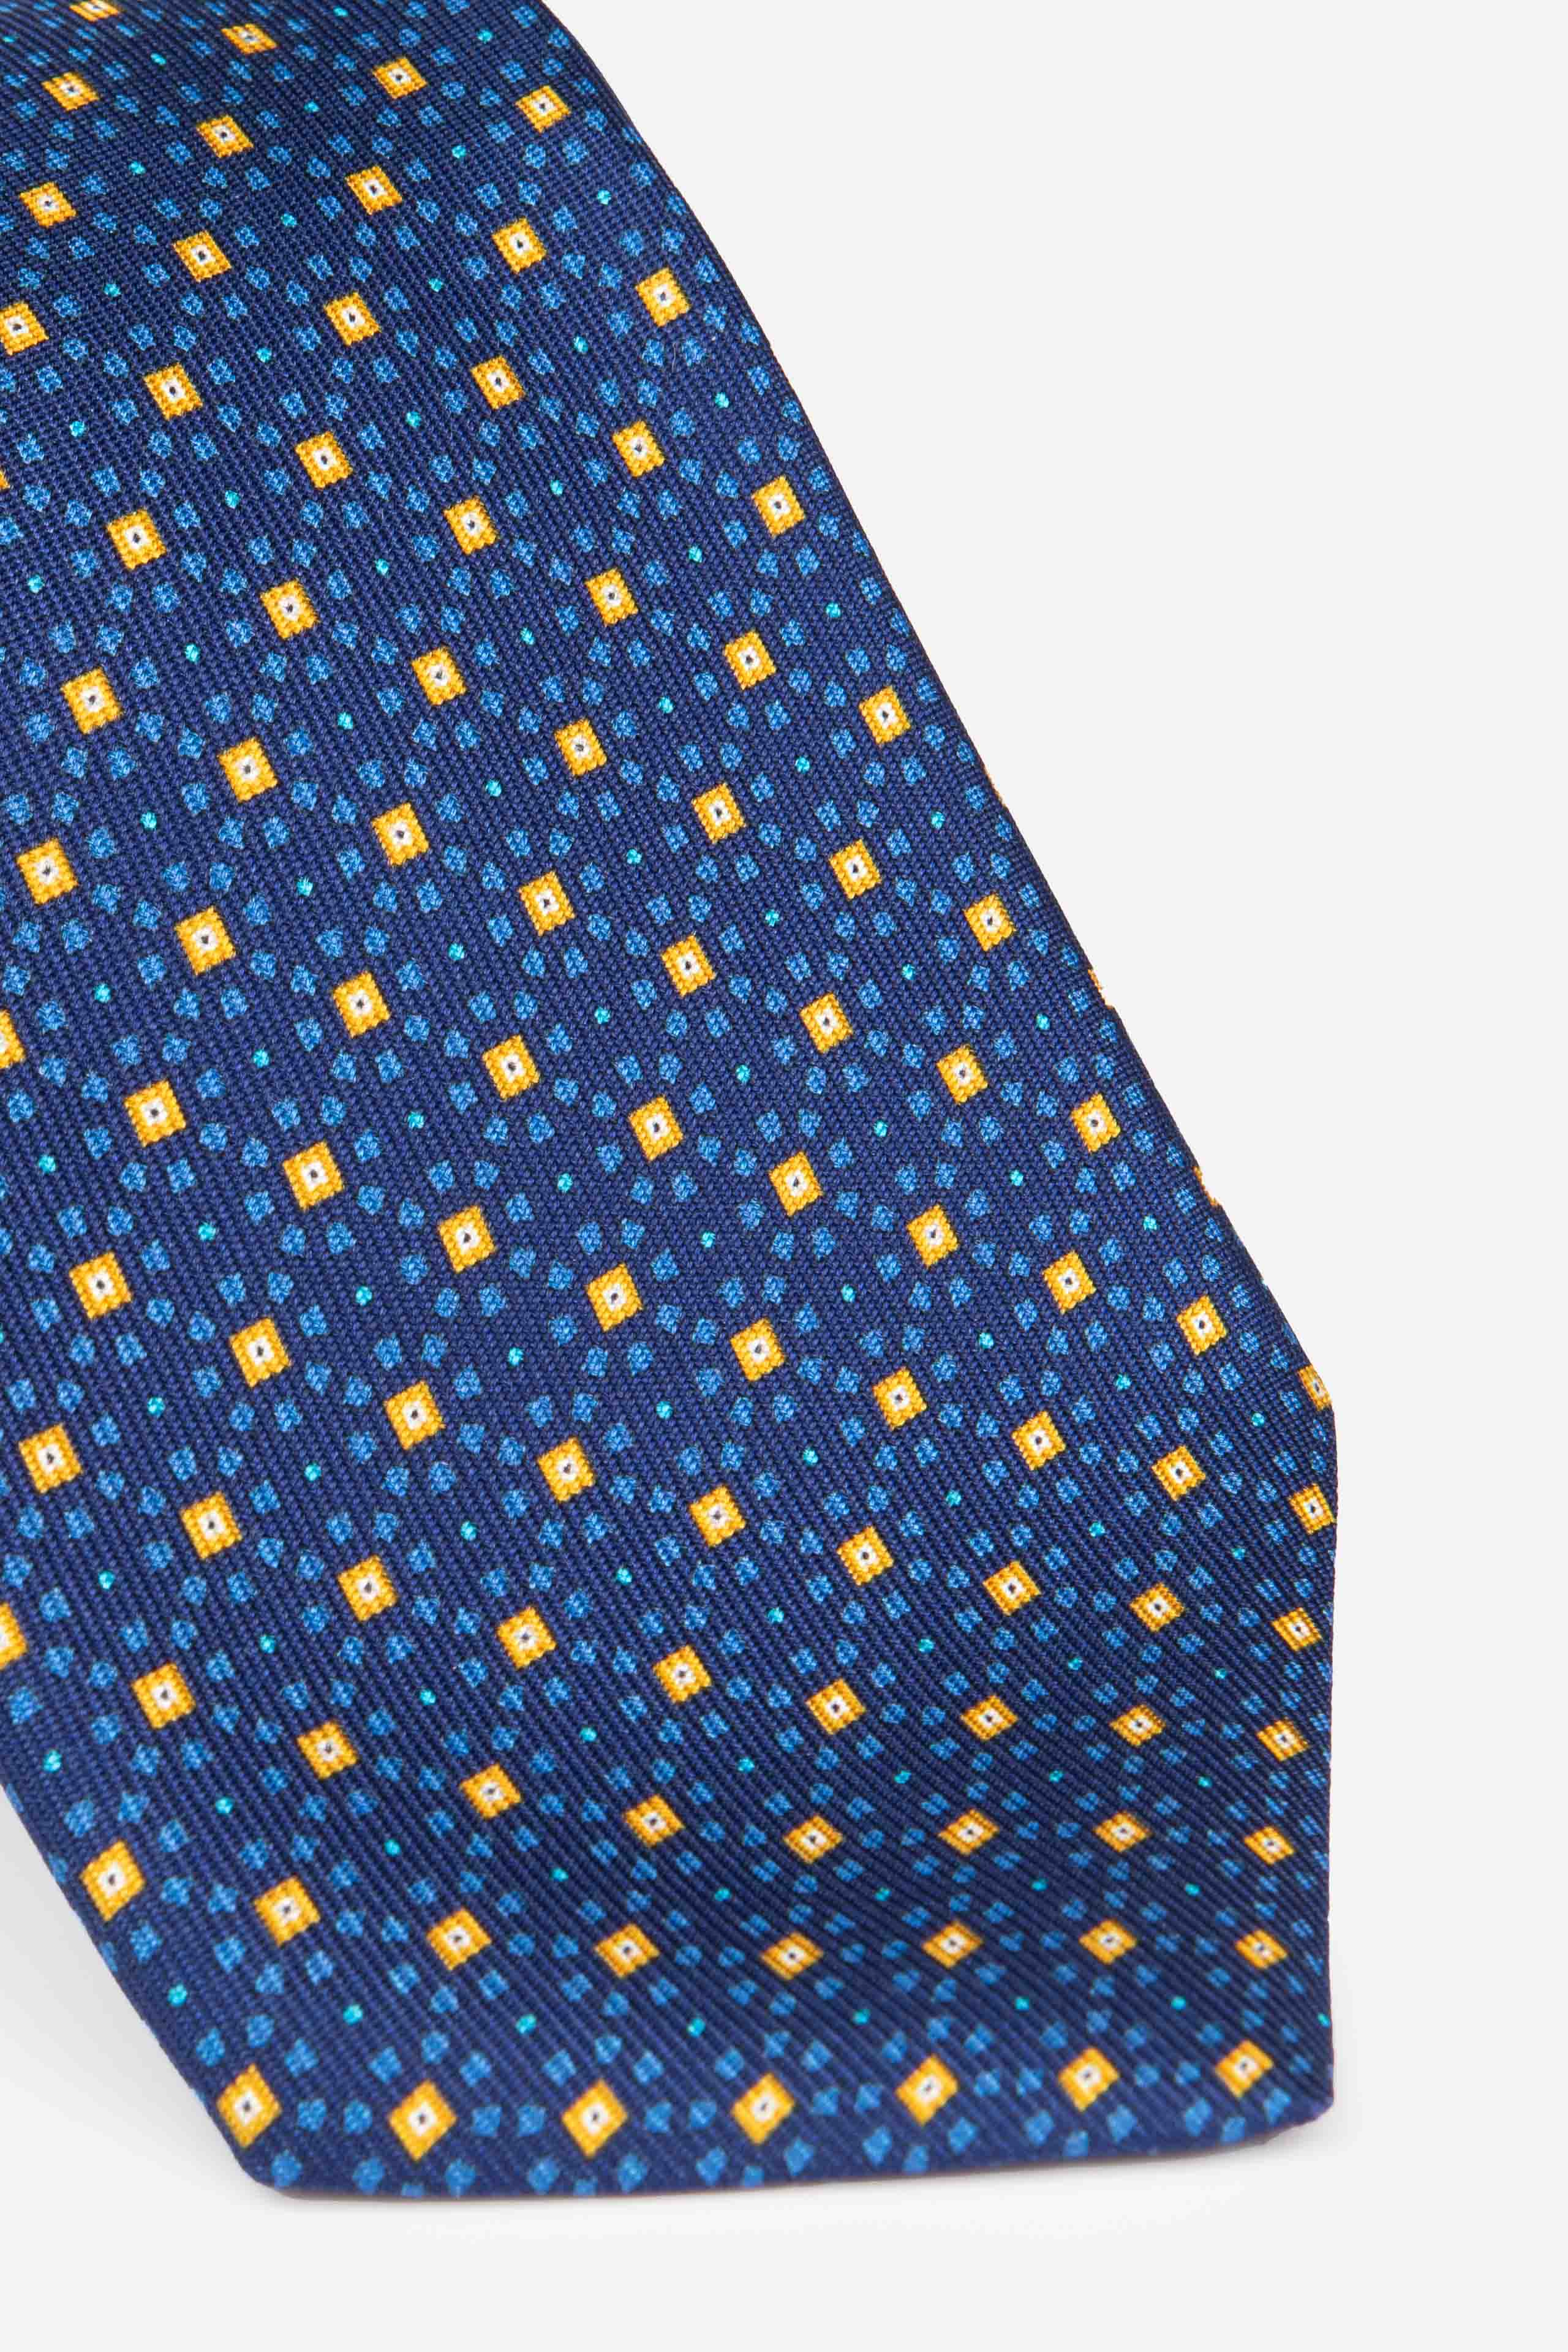 Cravatta blu microfantasia - FANT. BLUETTE